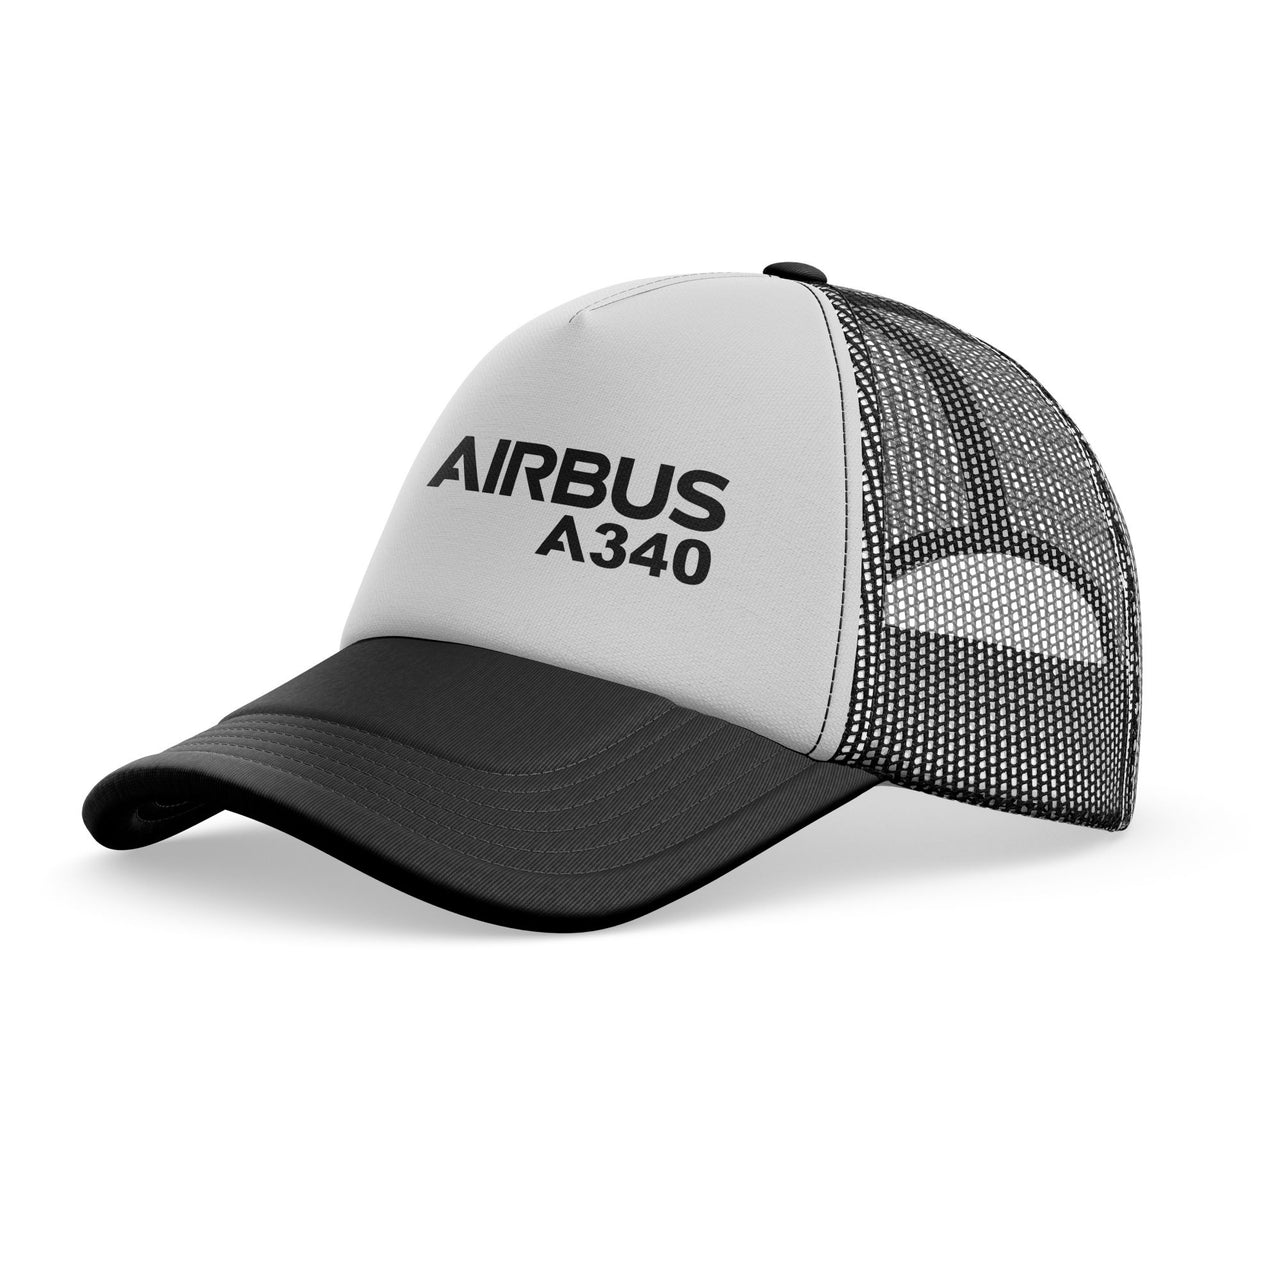 Airbus A340 & Text Designed Trucker Caps & Hats